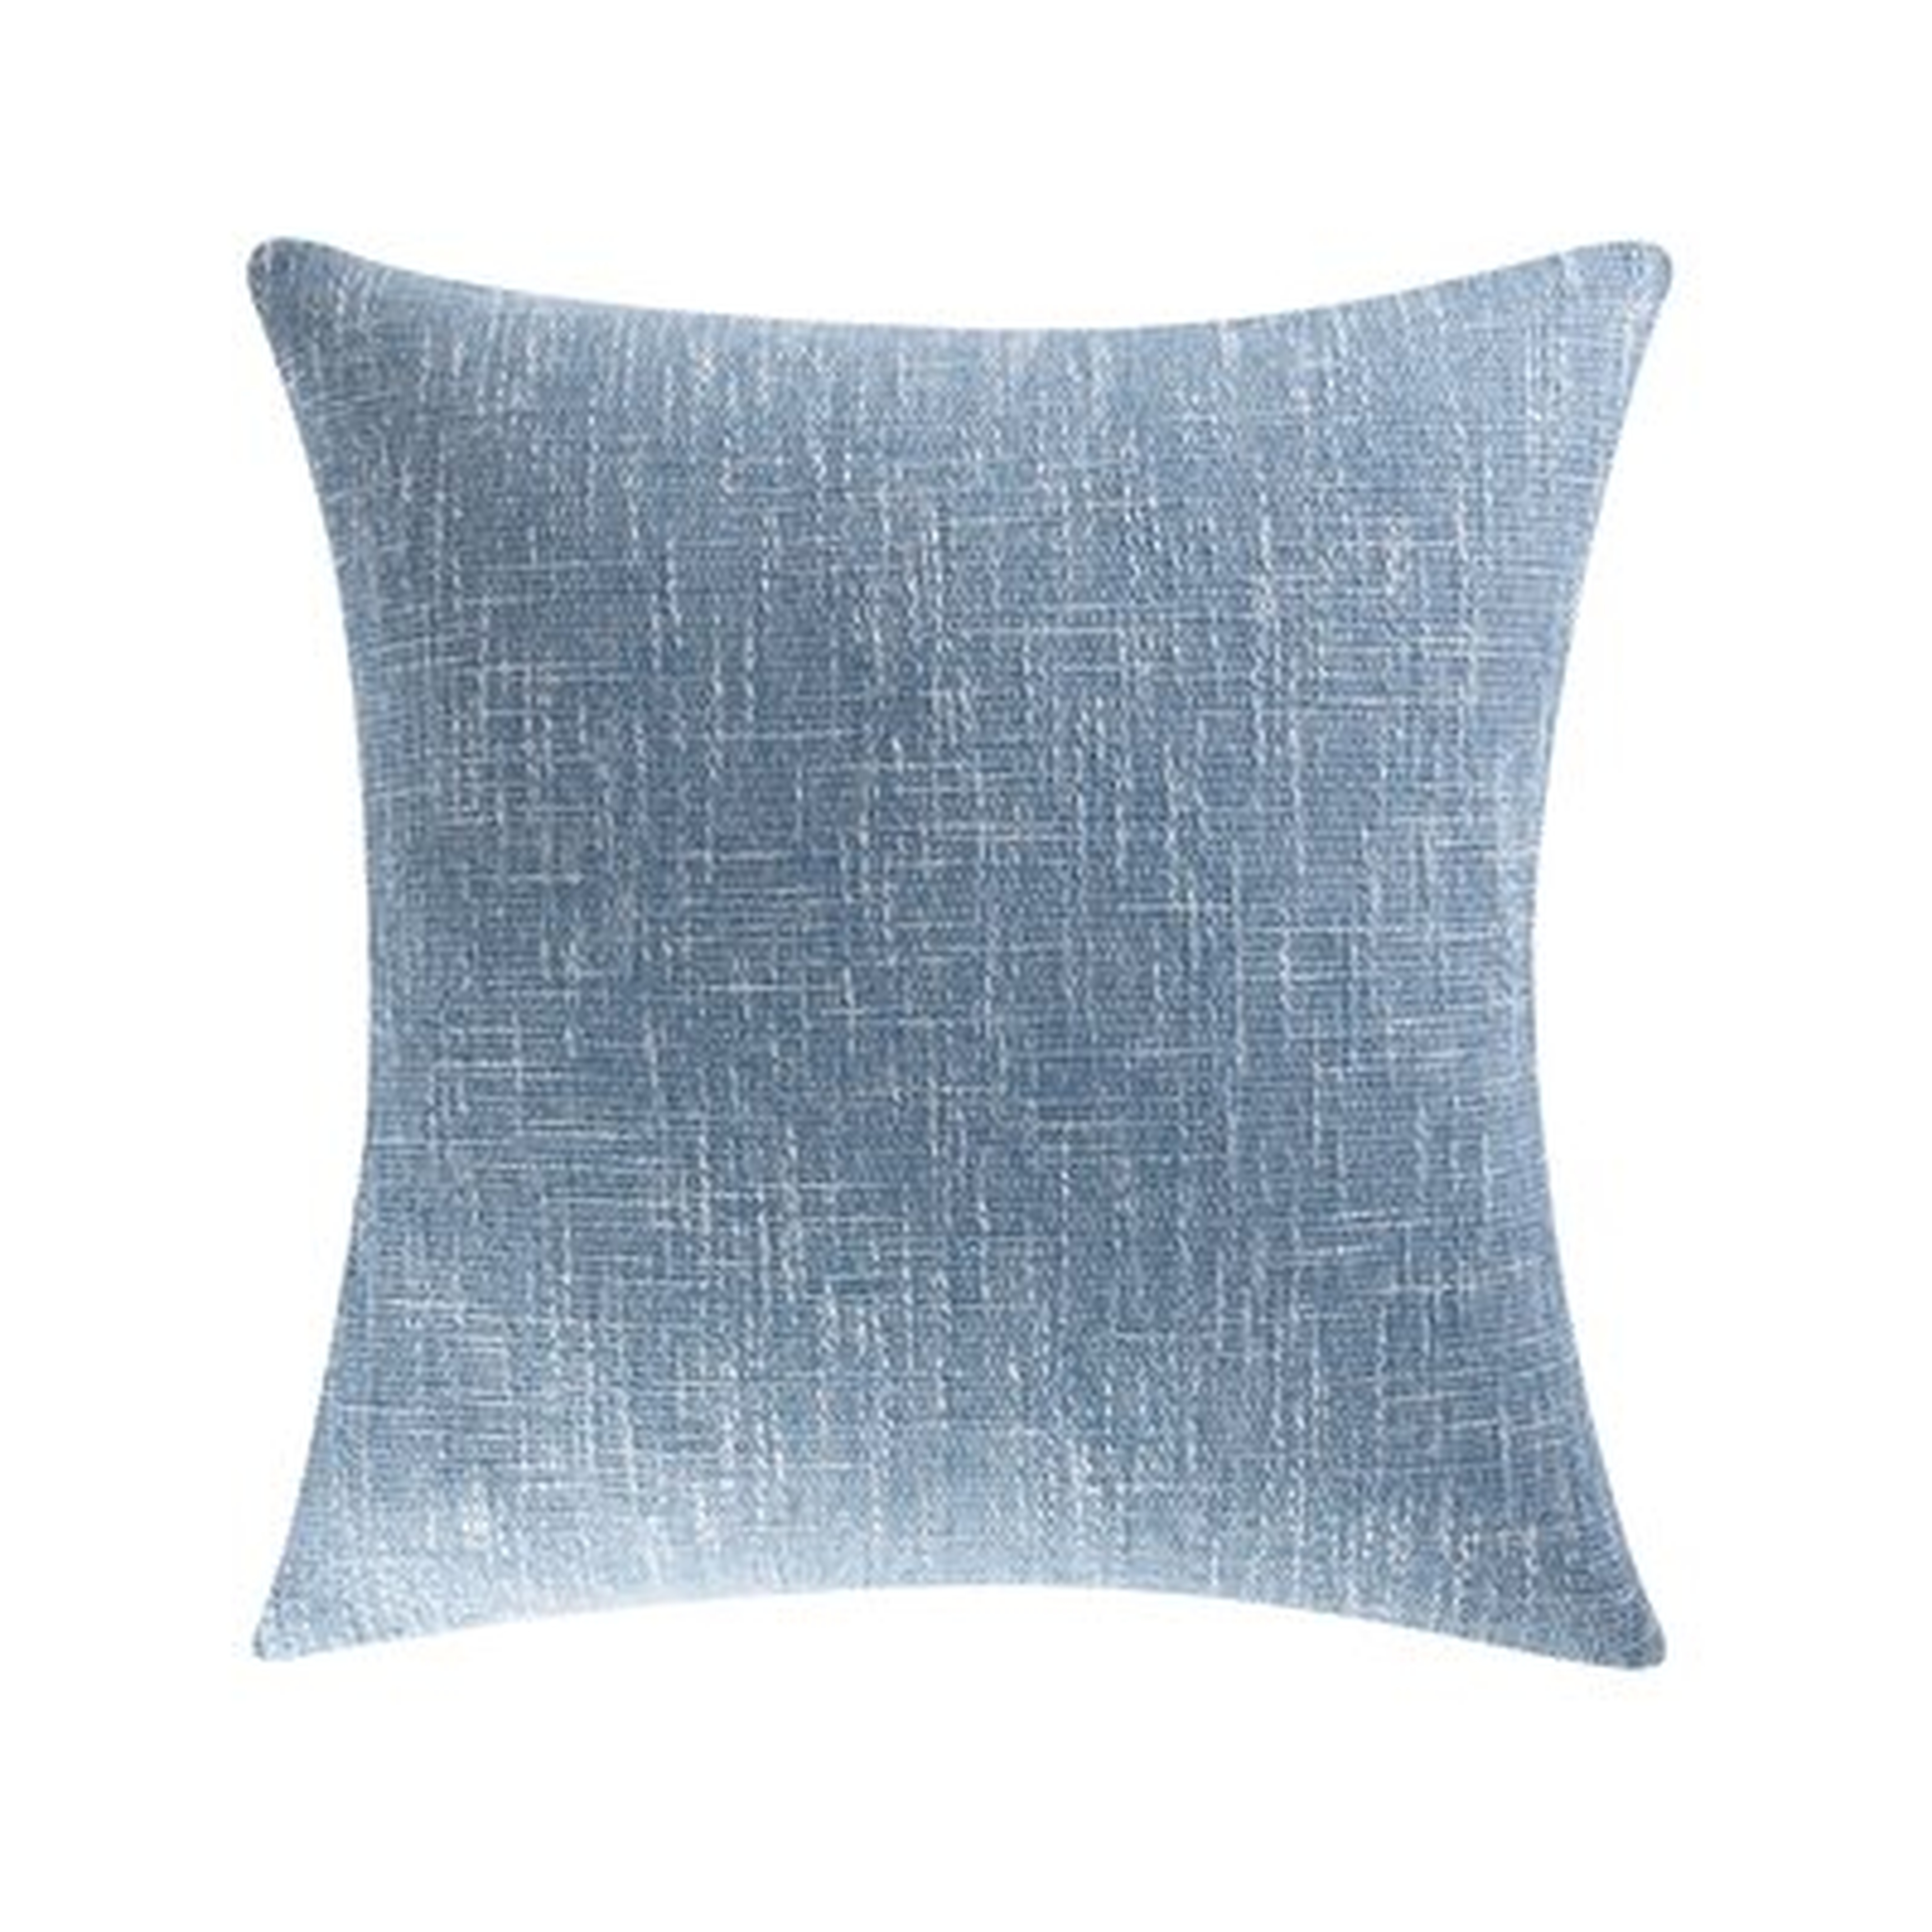 Jaeda Square Pillow Cover - Wayfair